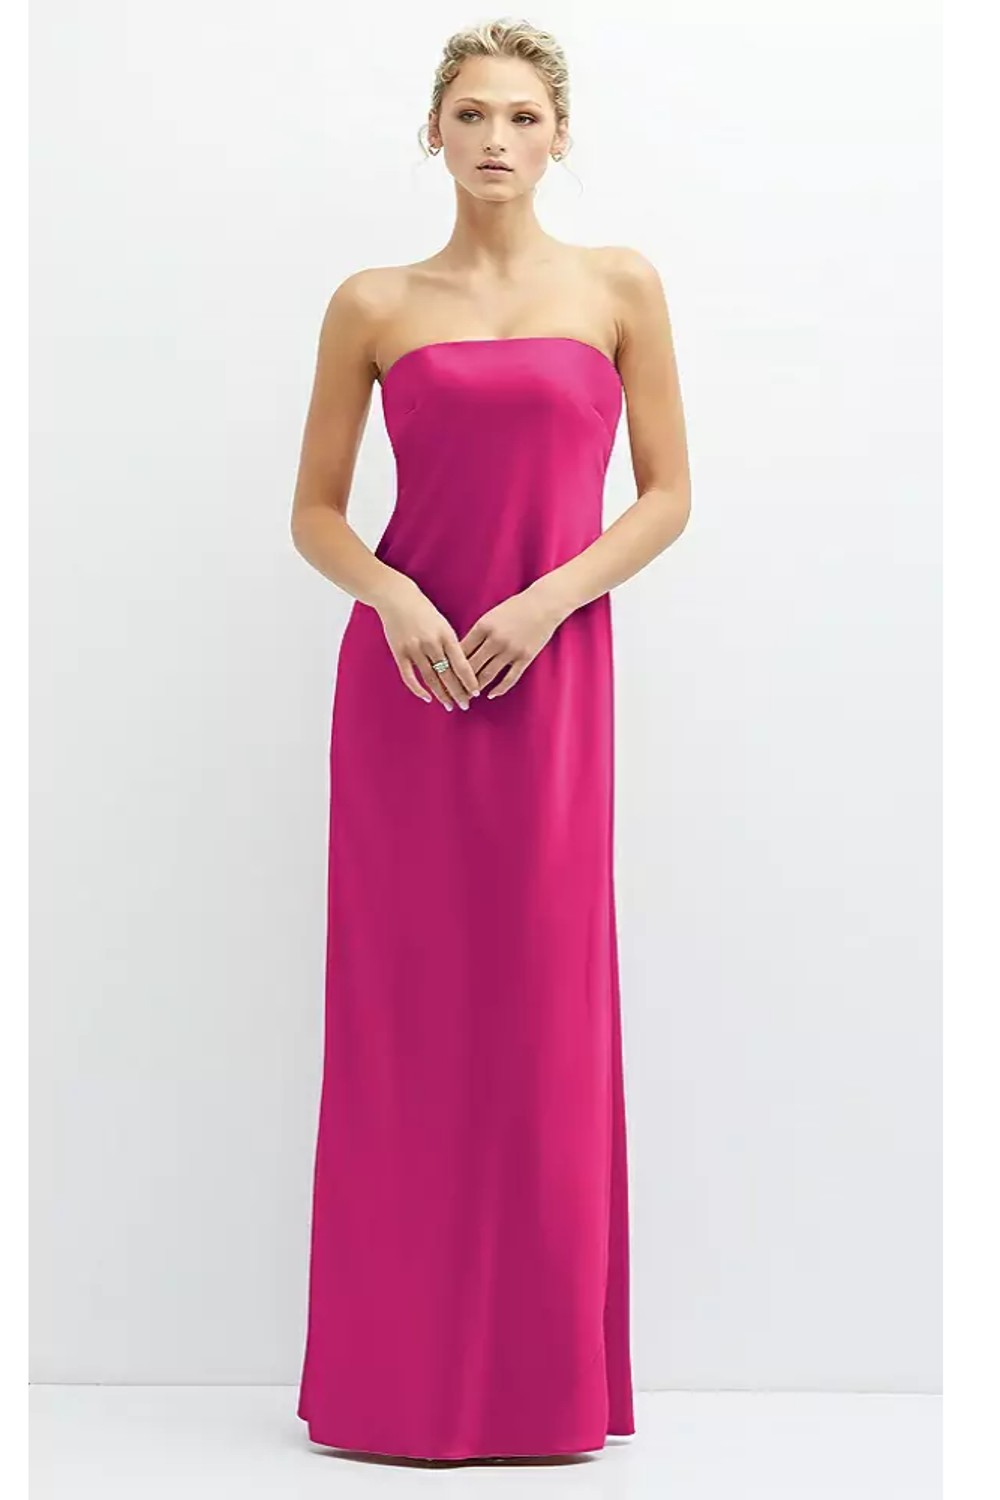 Juliette Think Pink Bridesmaid Dress by Dessy